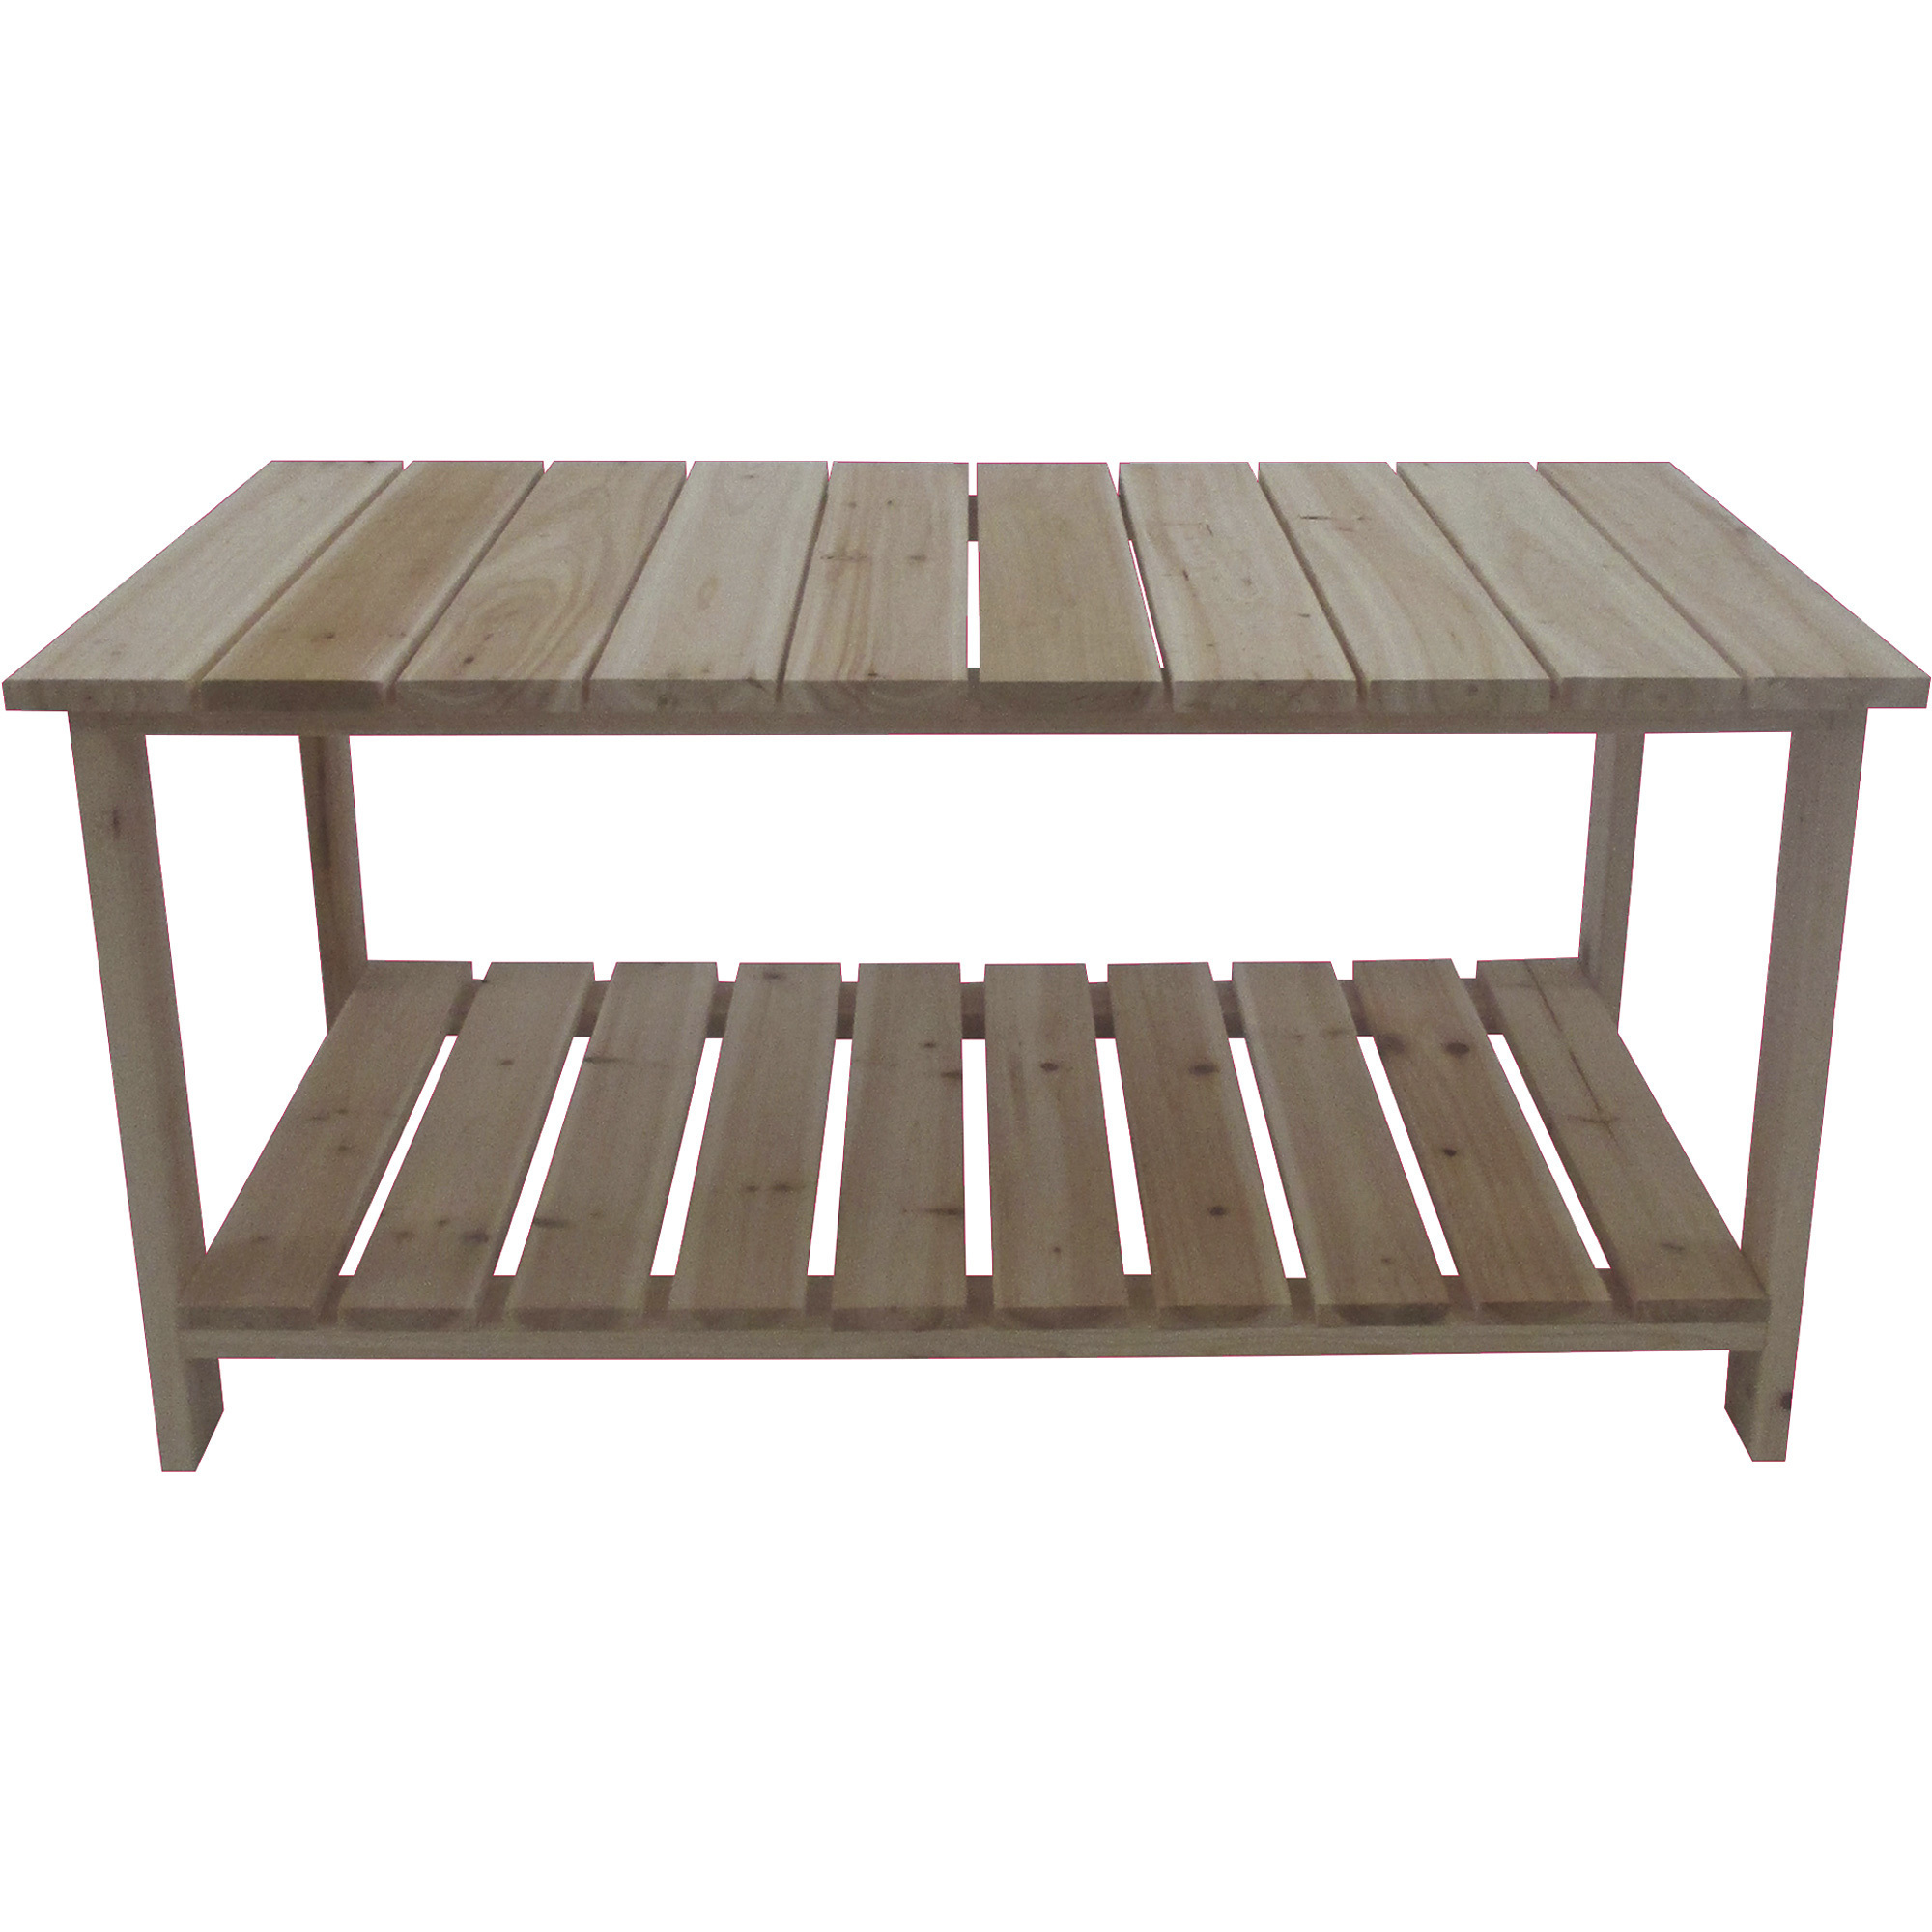 Stonegate Designs Fir Wood Coffee Table â 37 1/2Inch L x 20Inch W x 18 1/4Inch H, Model DSL-9201-L